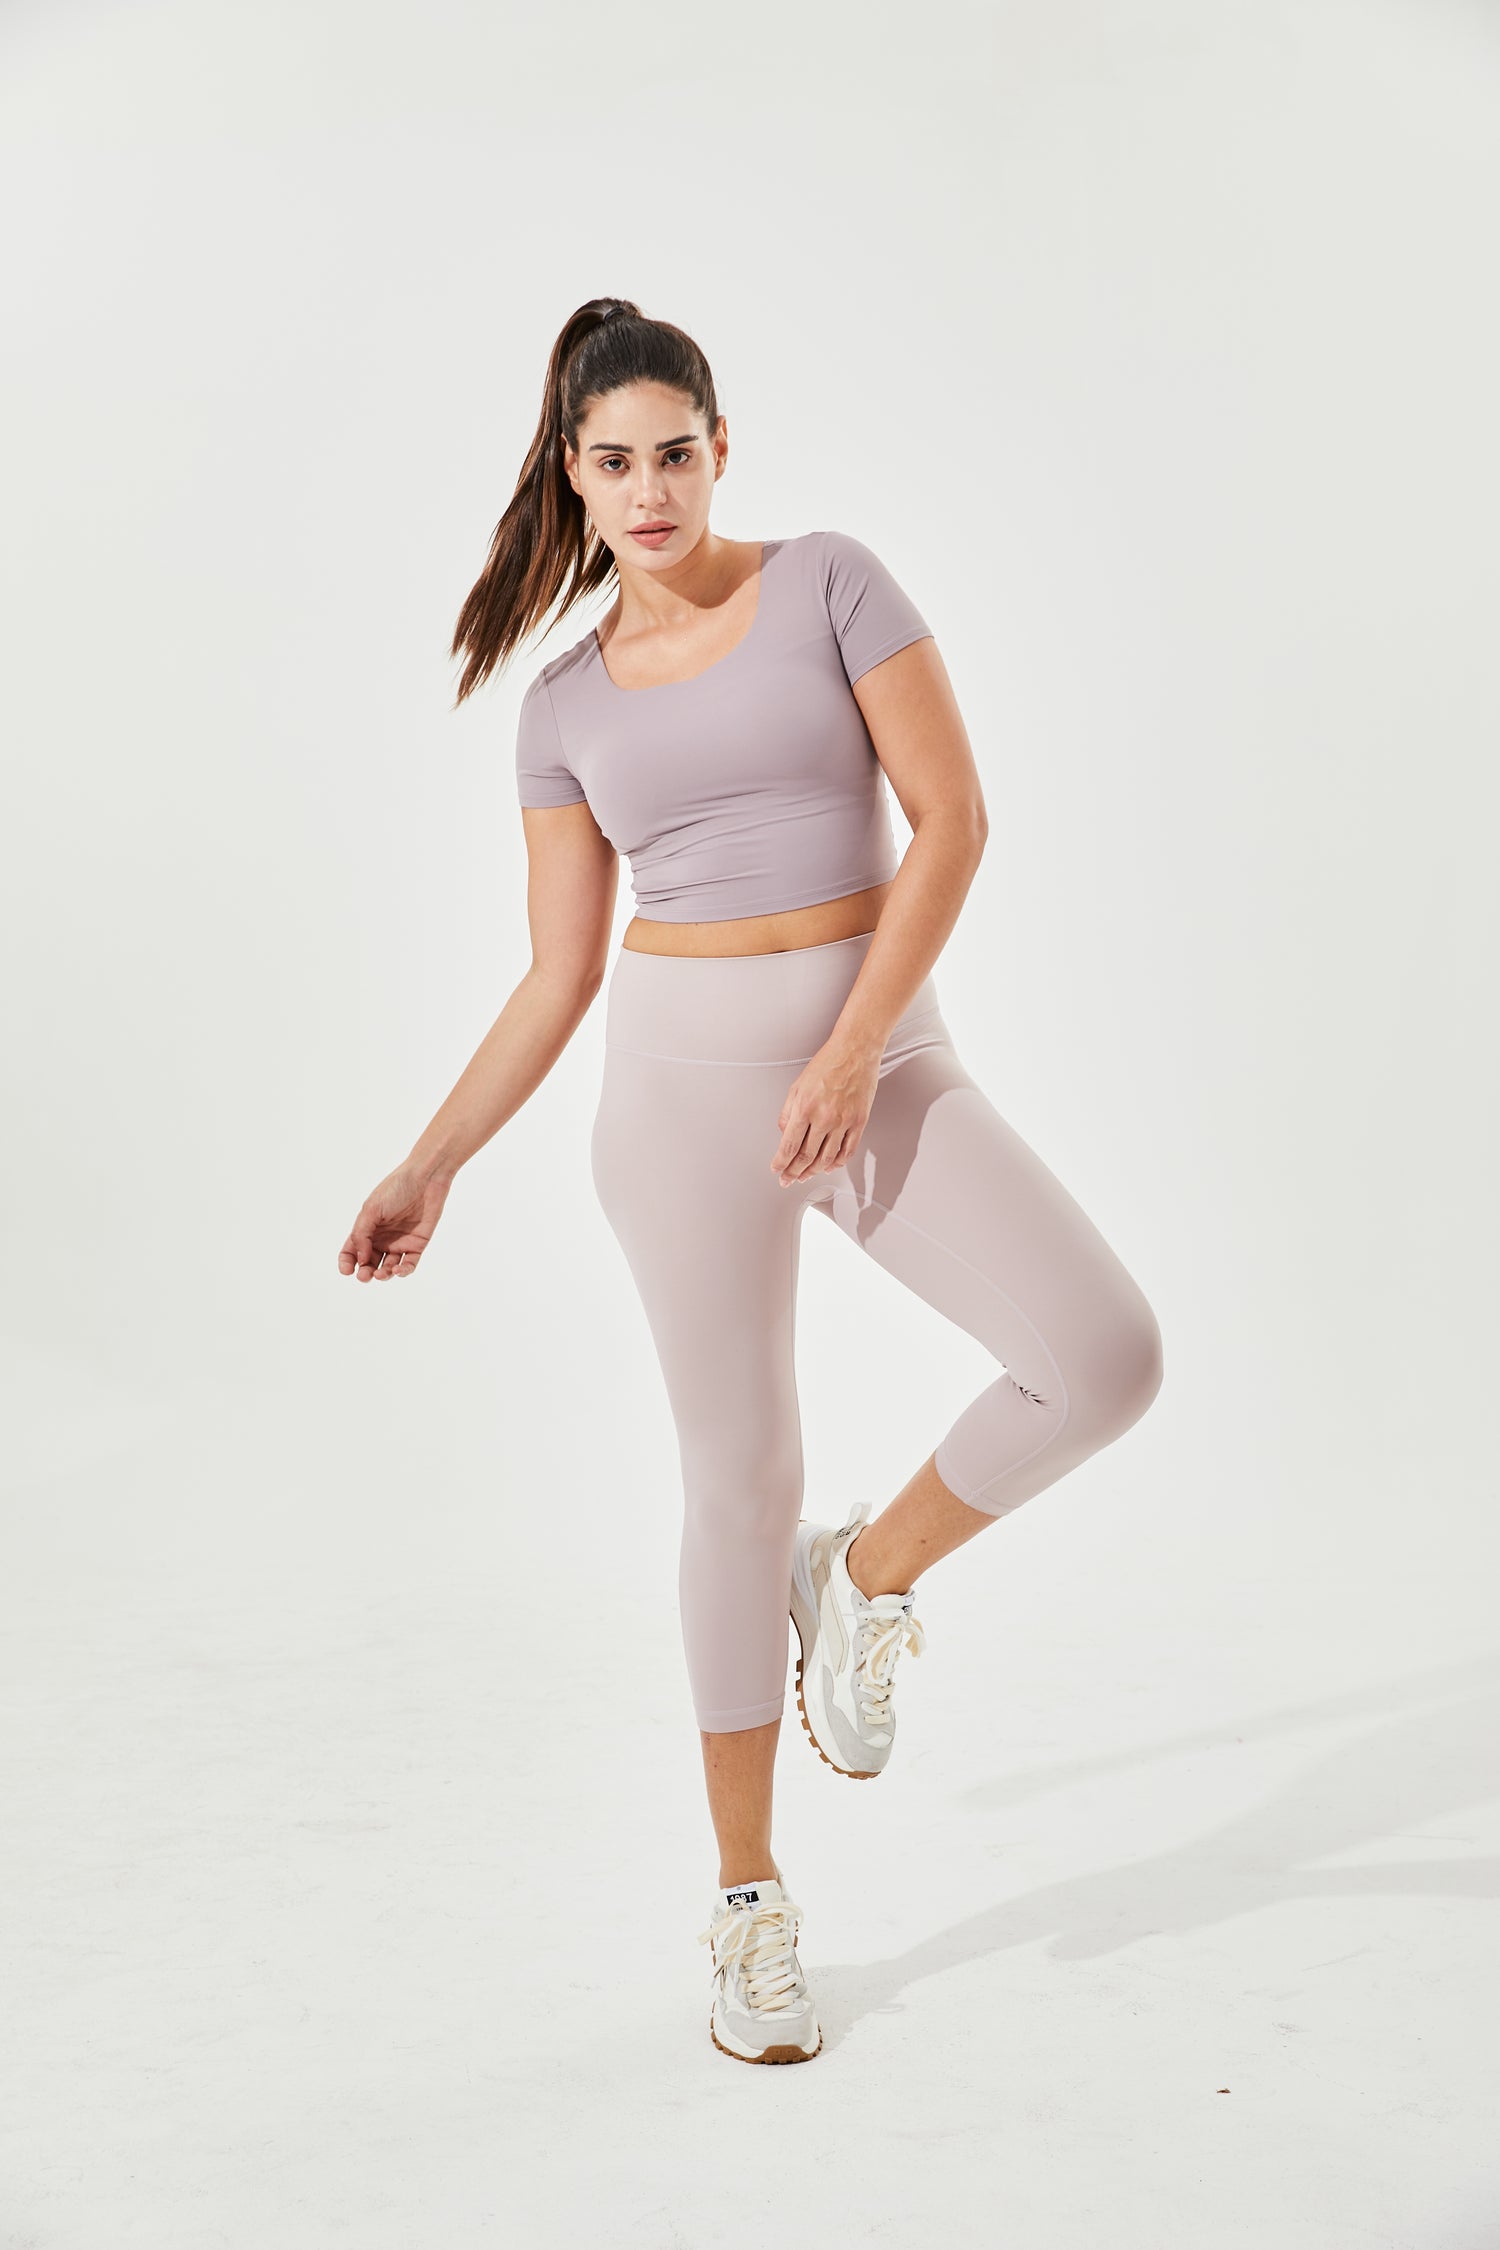 Women's Capri Leggings Yoga Pants Cut Out Design High Waist Bottoms Tummy  Control Butt Lift Quick Dry White Black Green Yoga Fitness Gym Workout  Sport